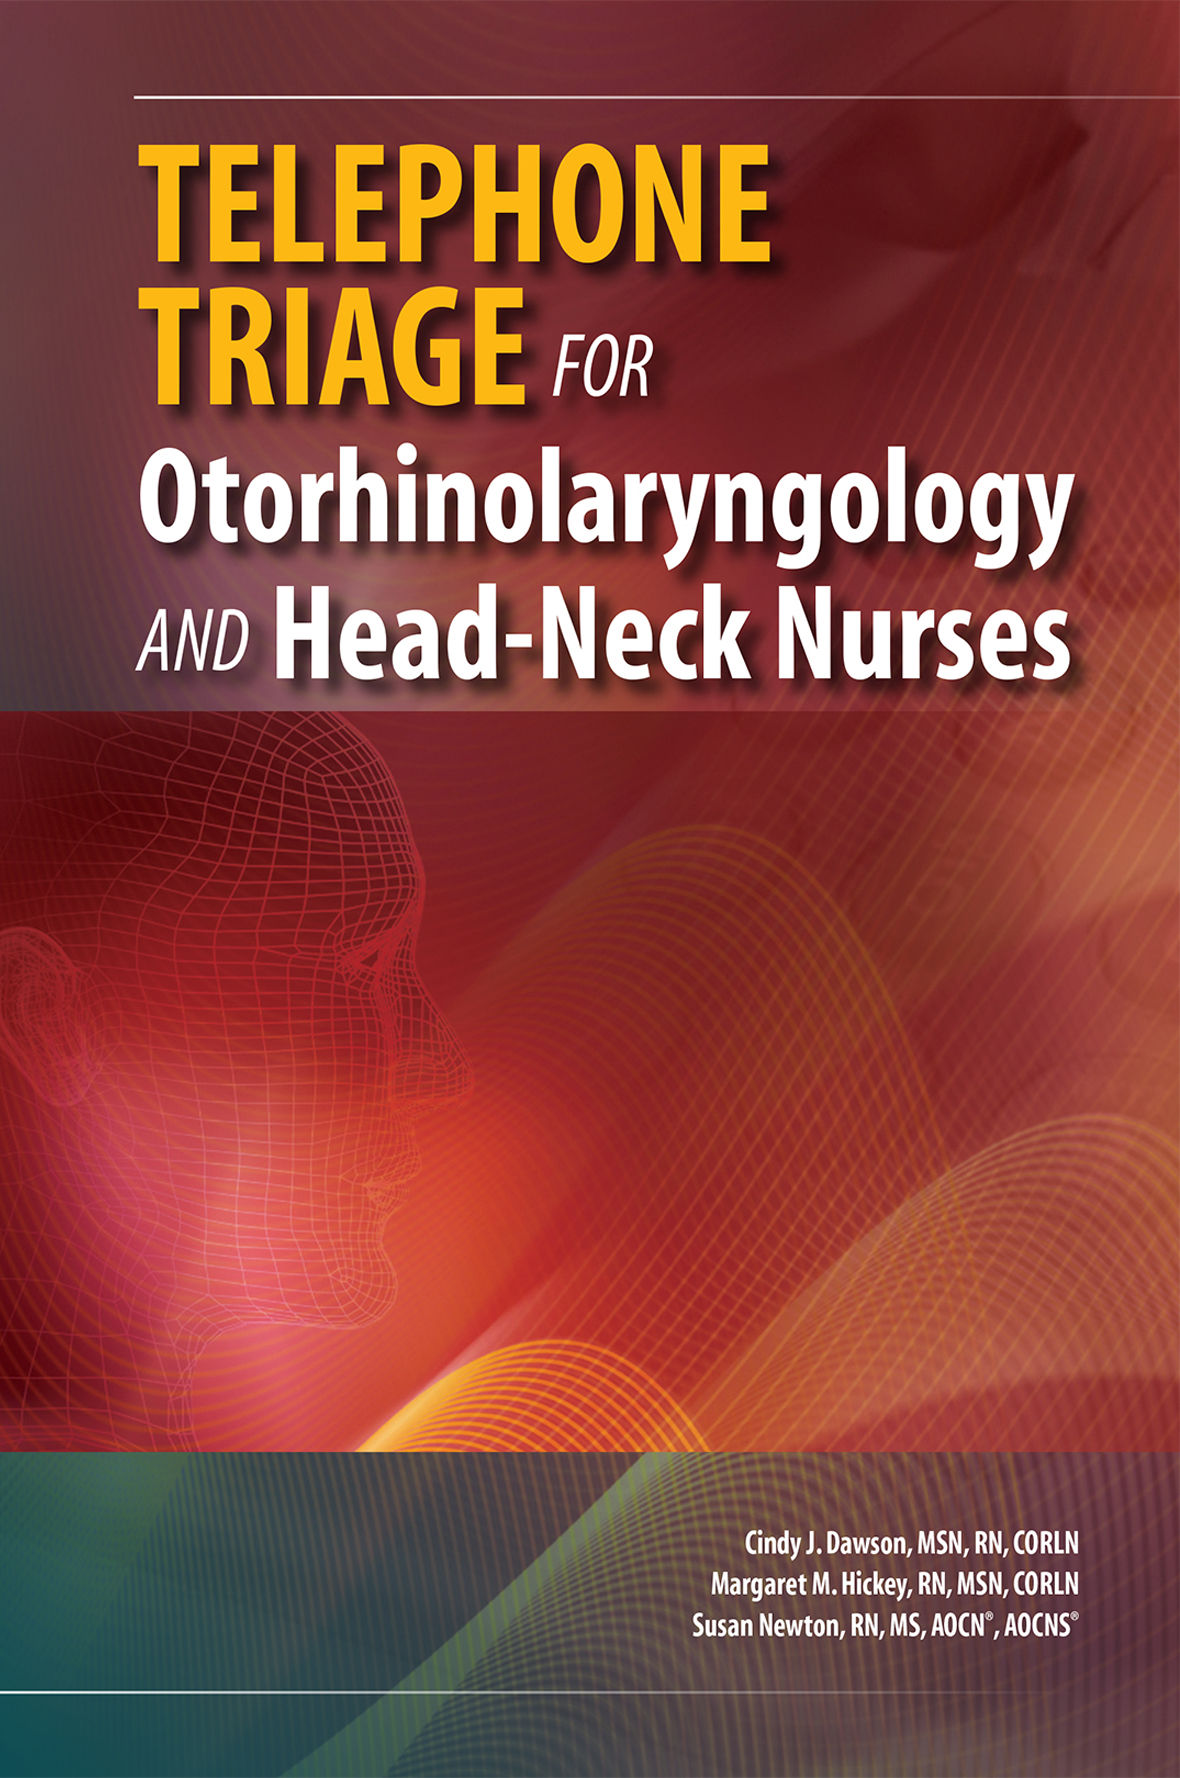 Telephone Triage for Otorhinolaryngology and Head-Neck Nurses